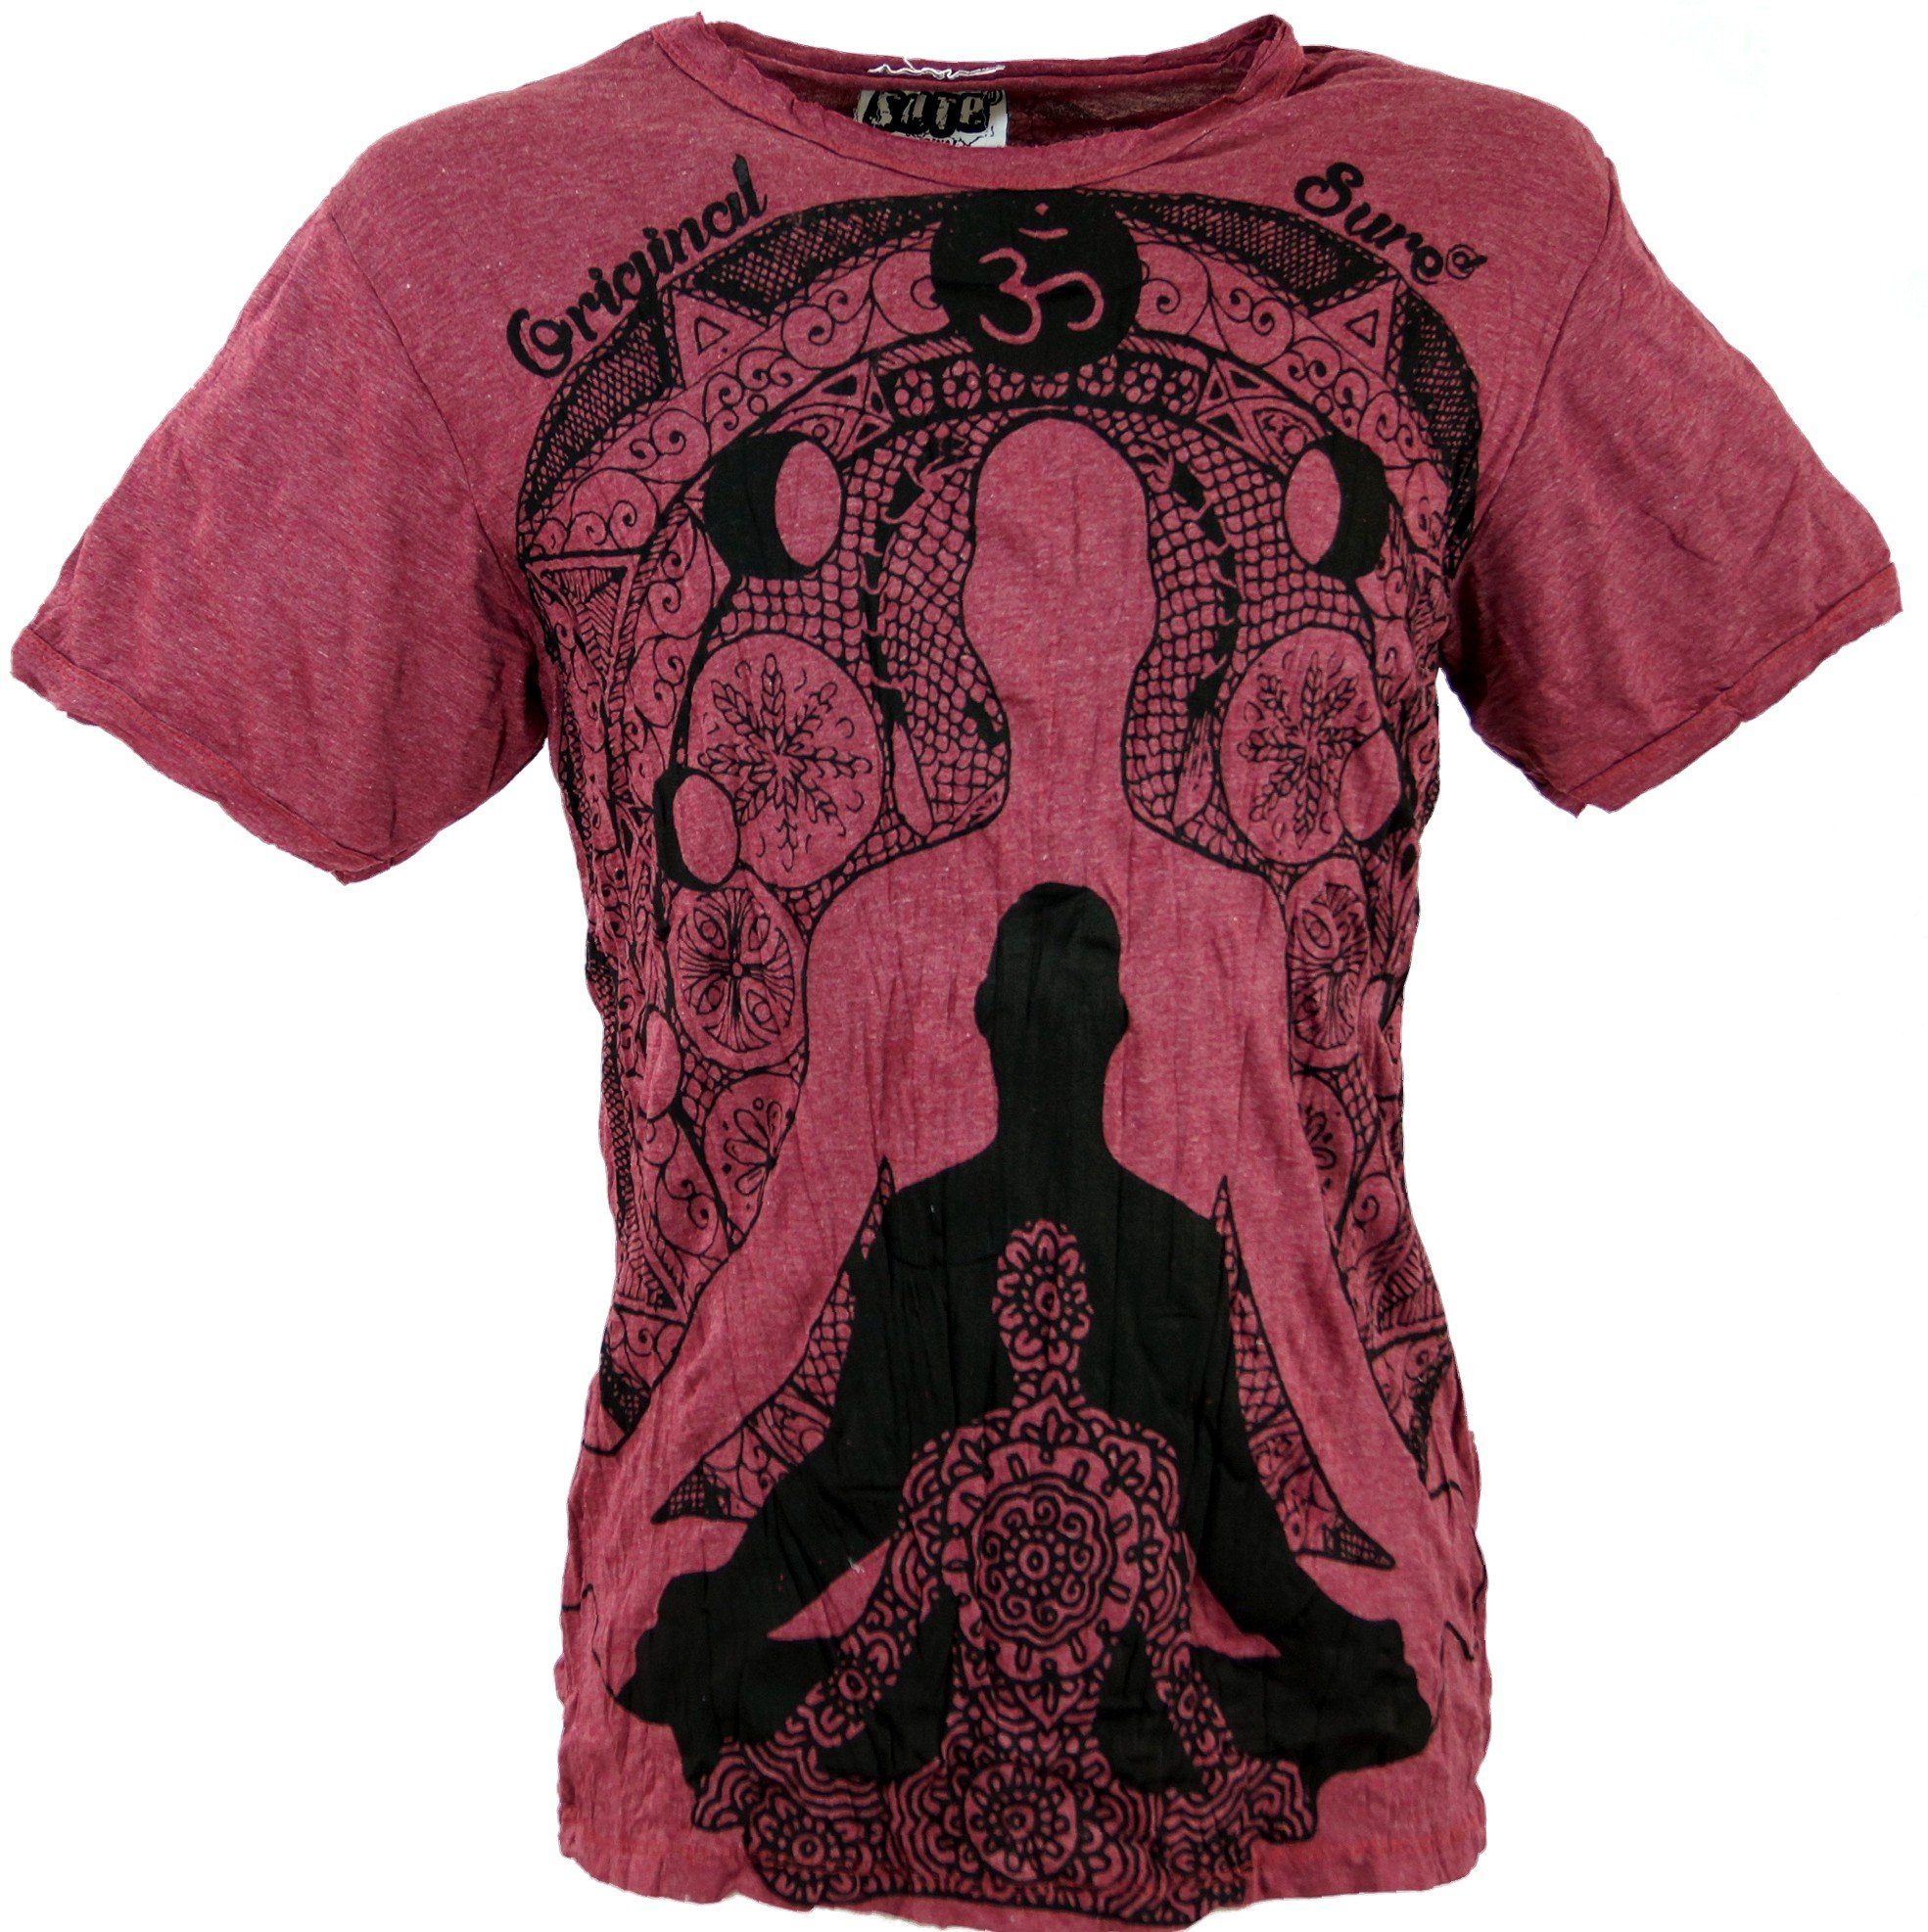 T-Shirt Guru-Shop Meditation alternative Bekleidung Festival, T-Shirt Goa Style, Sure Buddha - bordeaux